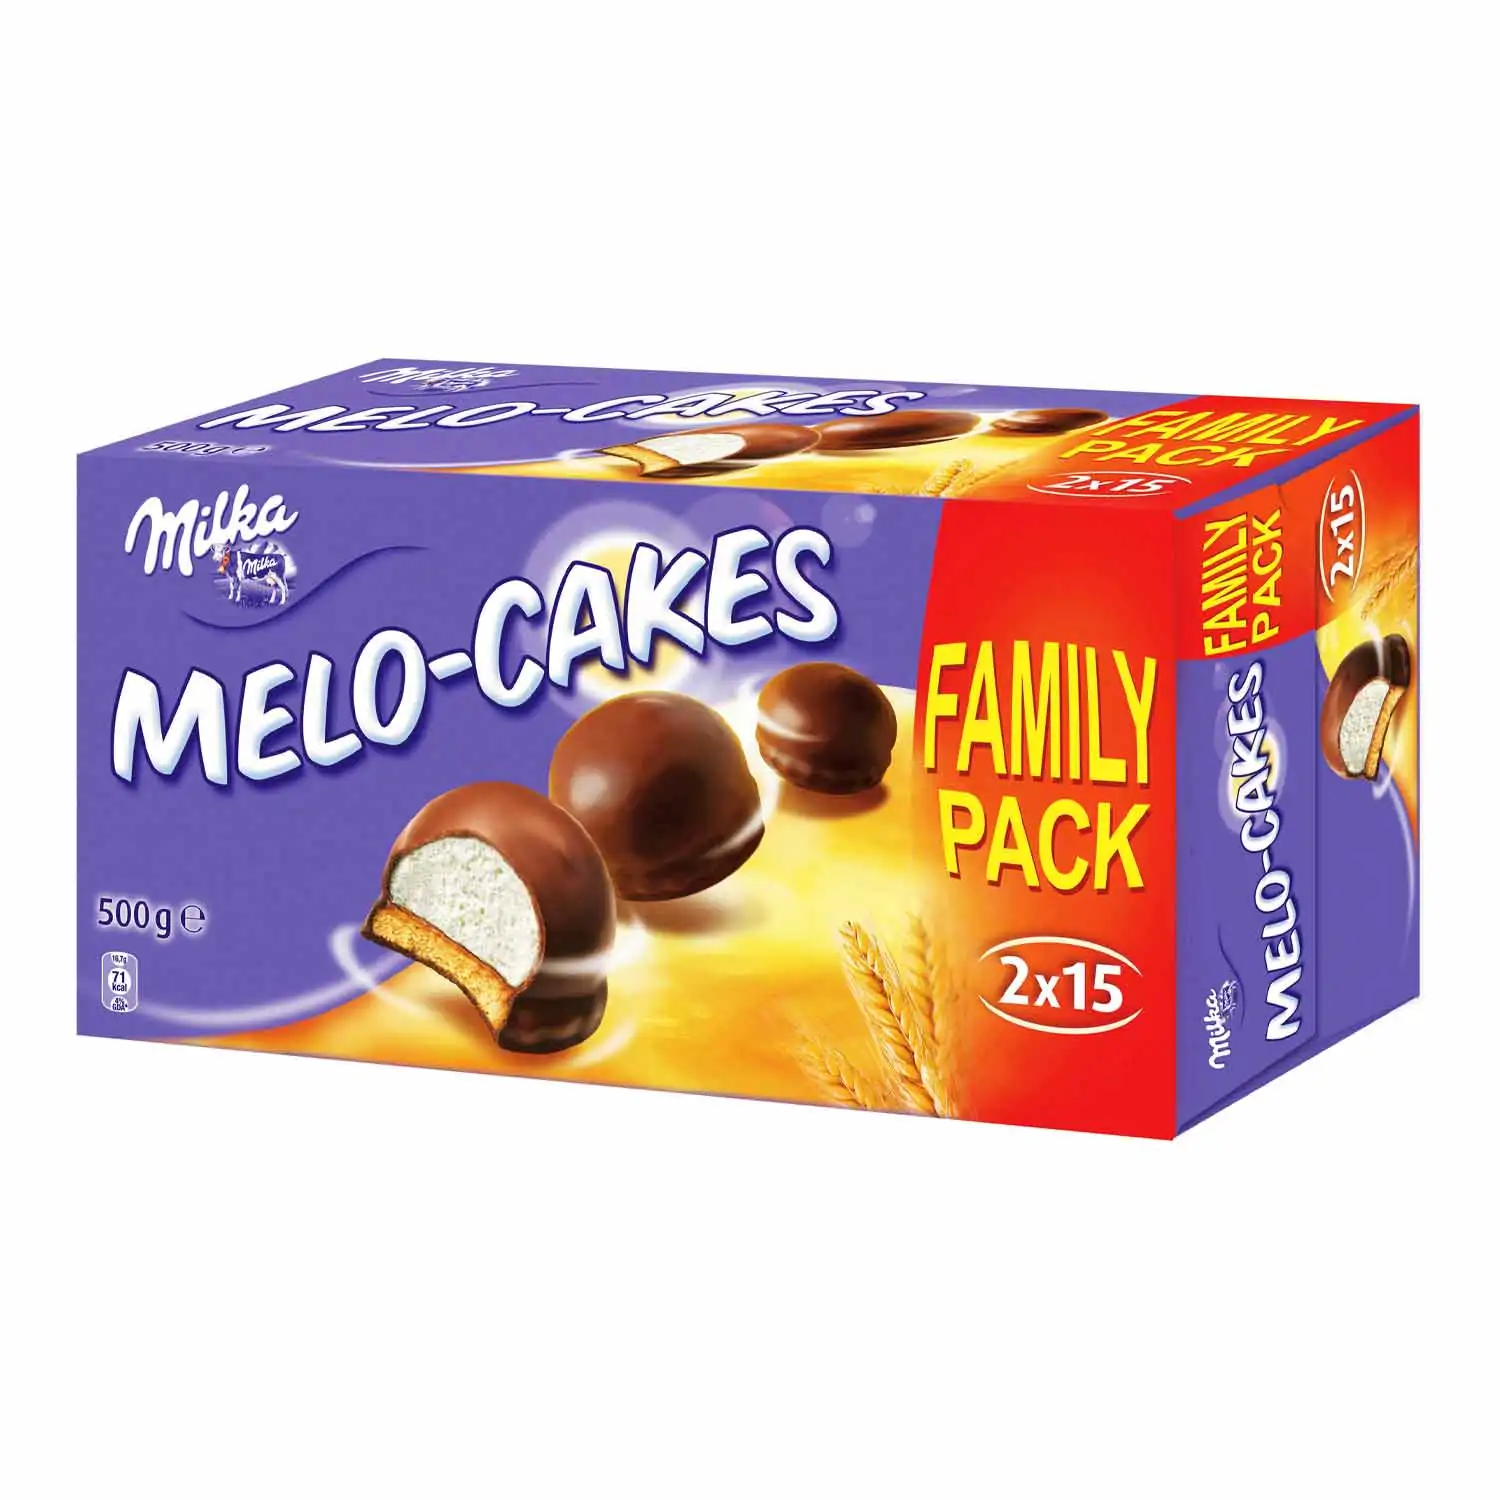 Milka melo-cakes 2x(15x16,6g) - Buy at Real Tobacco